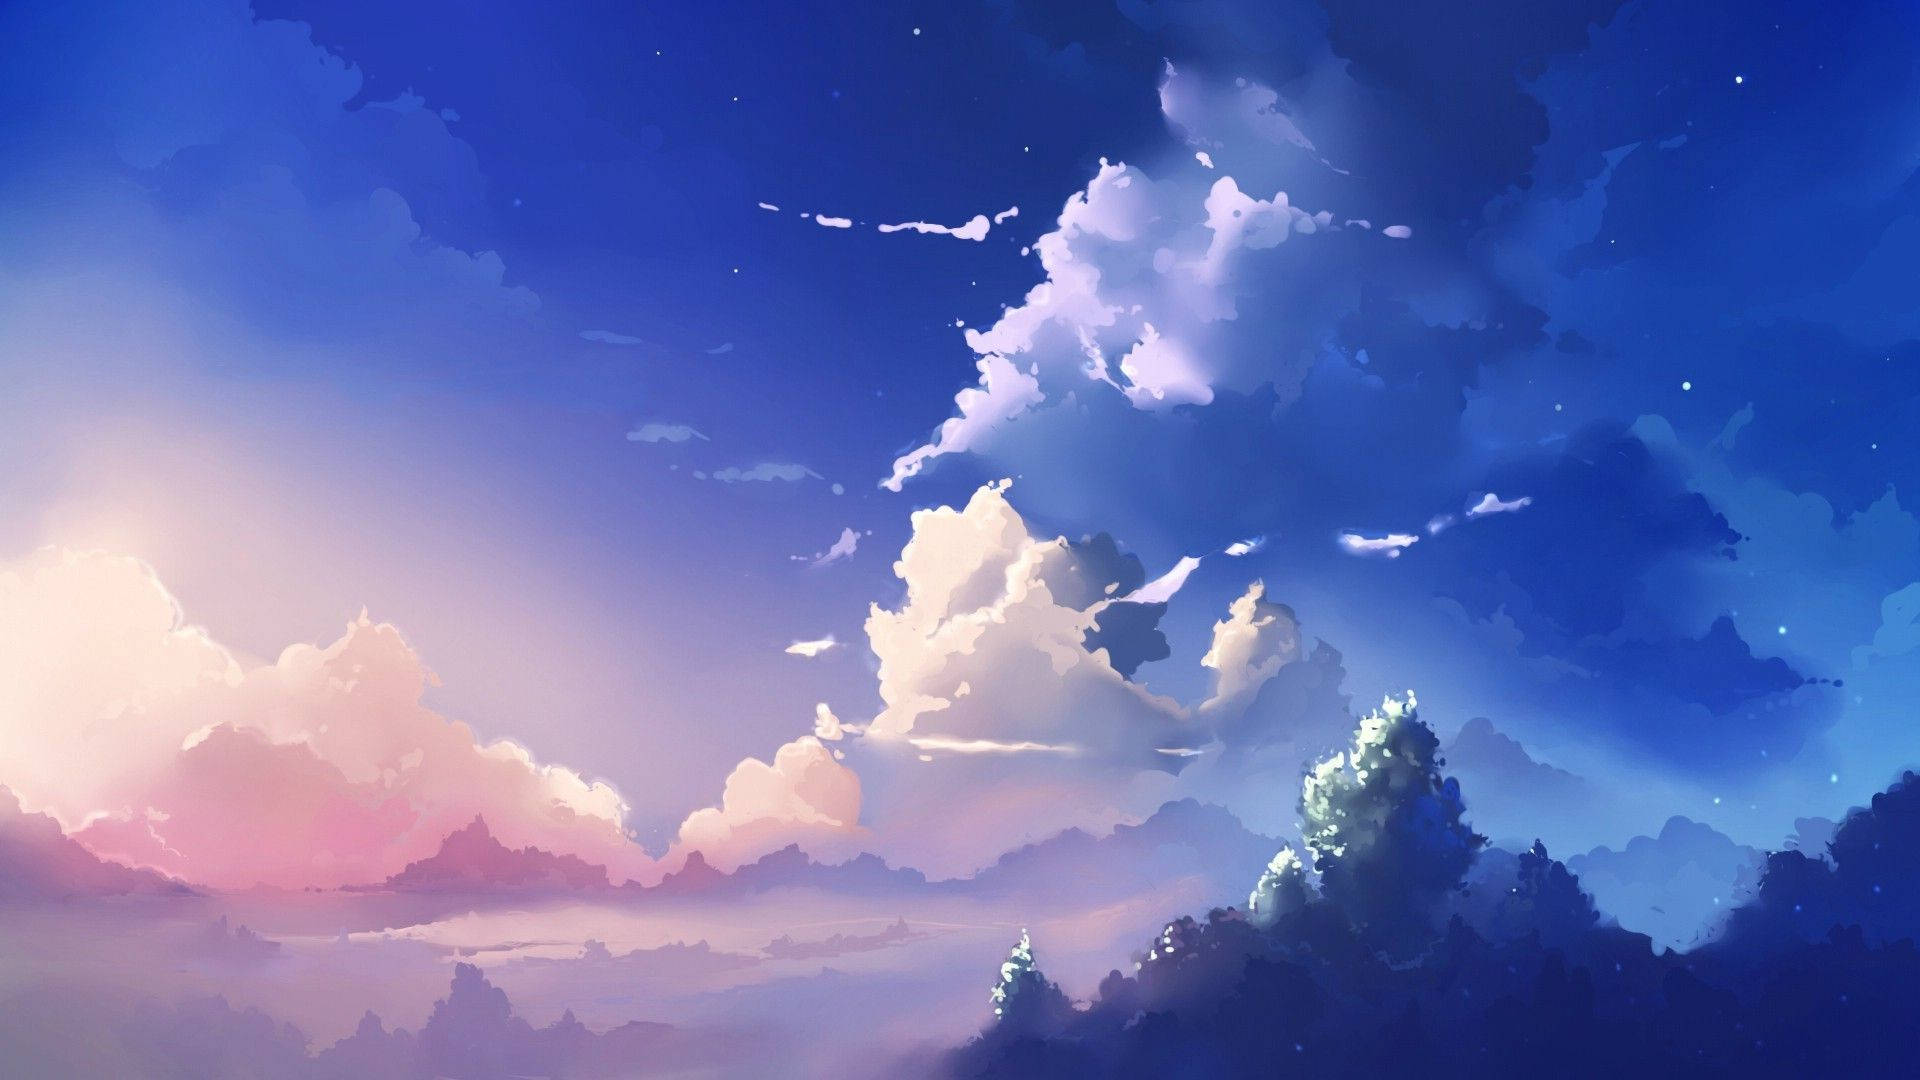 Deep Blue Sky Anime Landscape Background